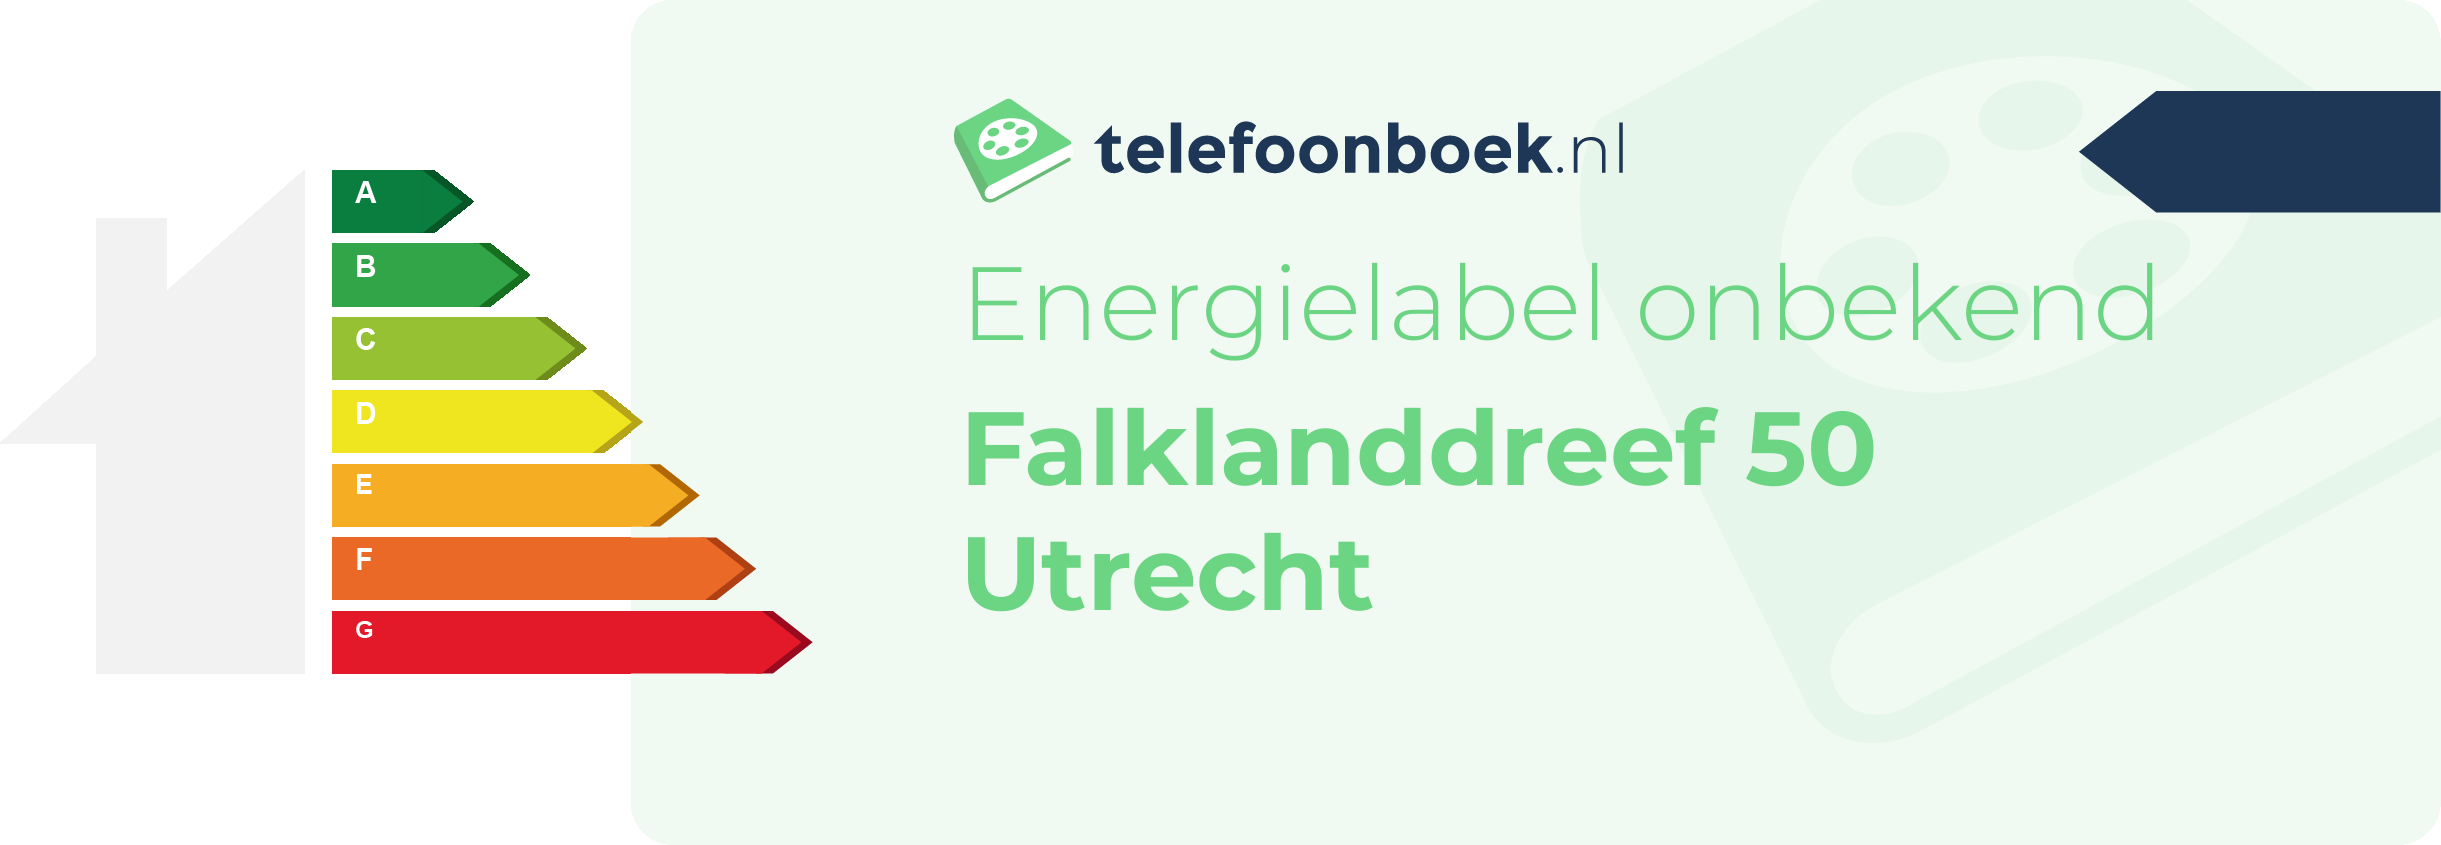 Energielabel Falklanddreef 50 Utrecht